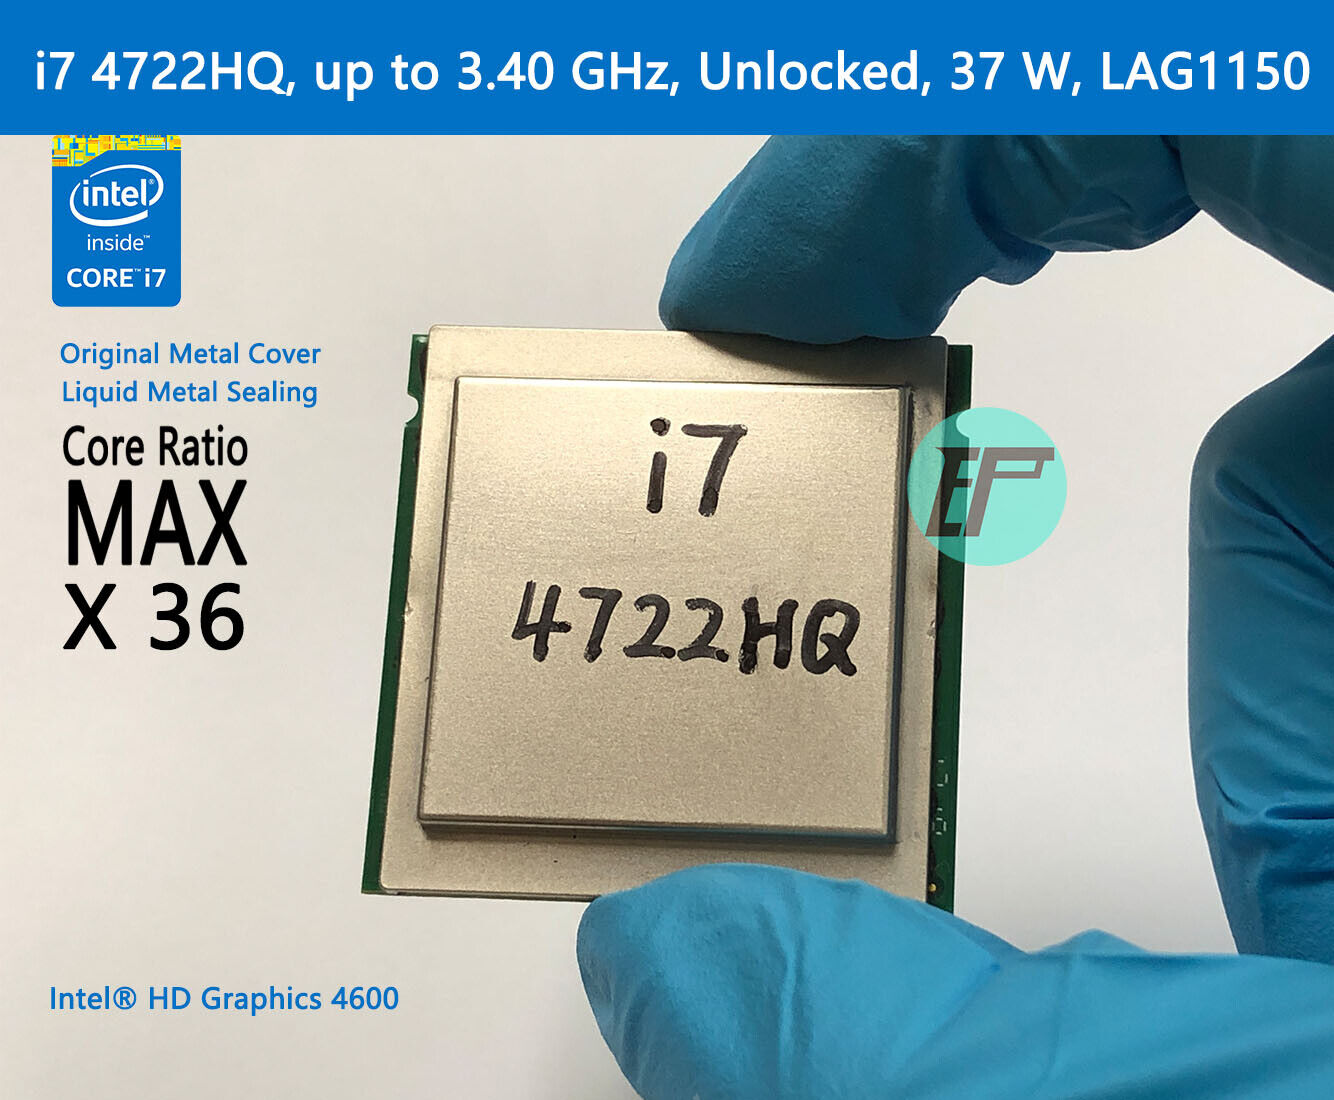 MAGIC REFORM Intel Mobile CPU i7 4722HQ, up to 3.40 GHz, Unlocked, 37 W, LGA1150